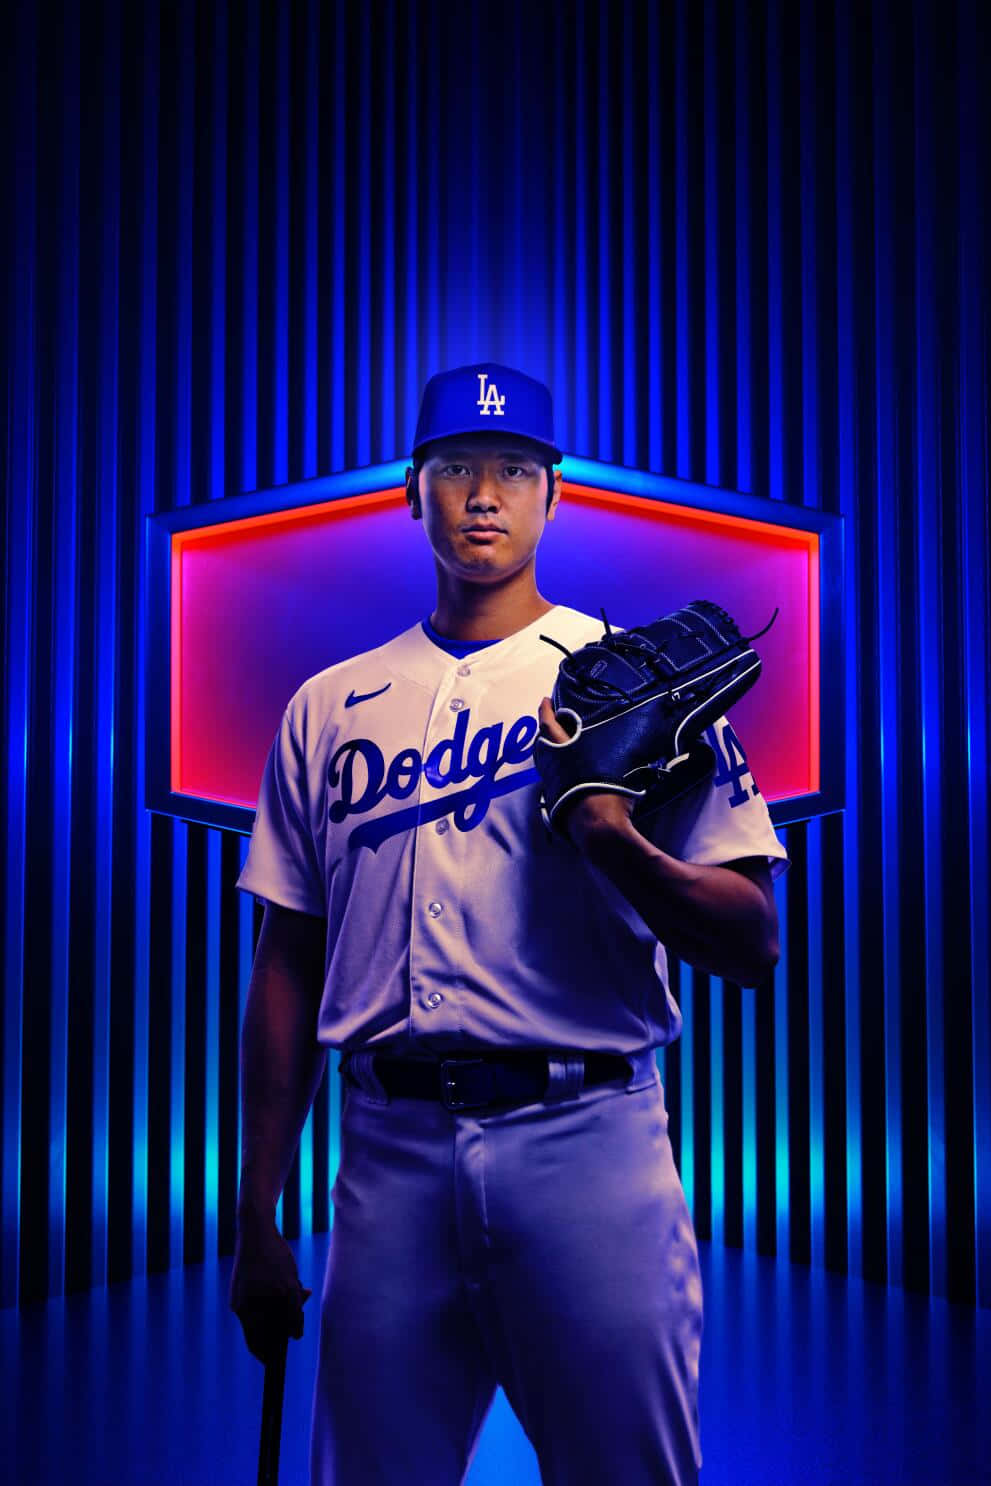 Dodgers Player Portrait Neon Lights Wallpaper